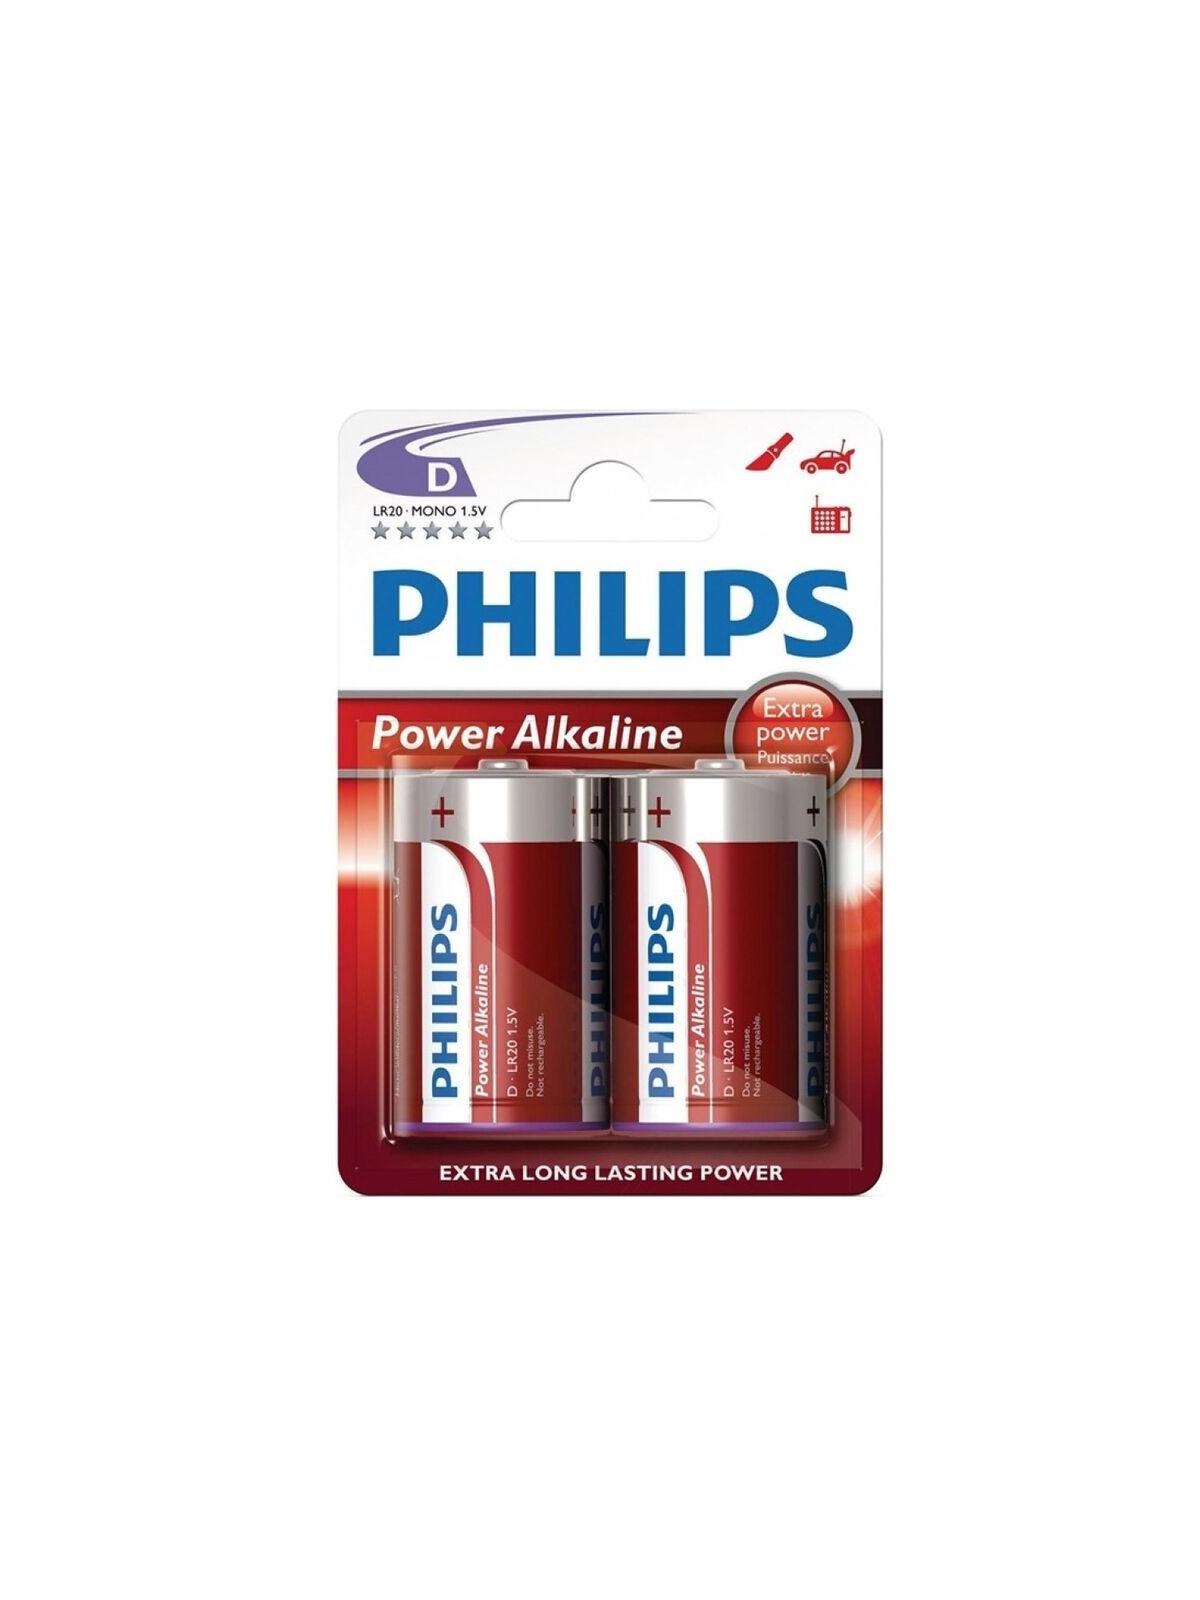 Philips Power Alkaline Pila D LR20 Blíster*2 - Comprar Pilas y baterías Phillips - Pilas & baterías (1)